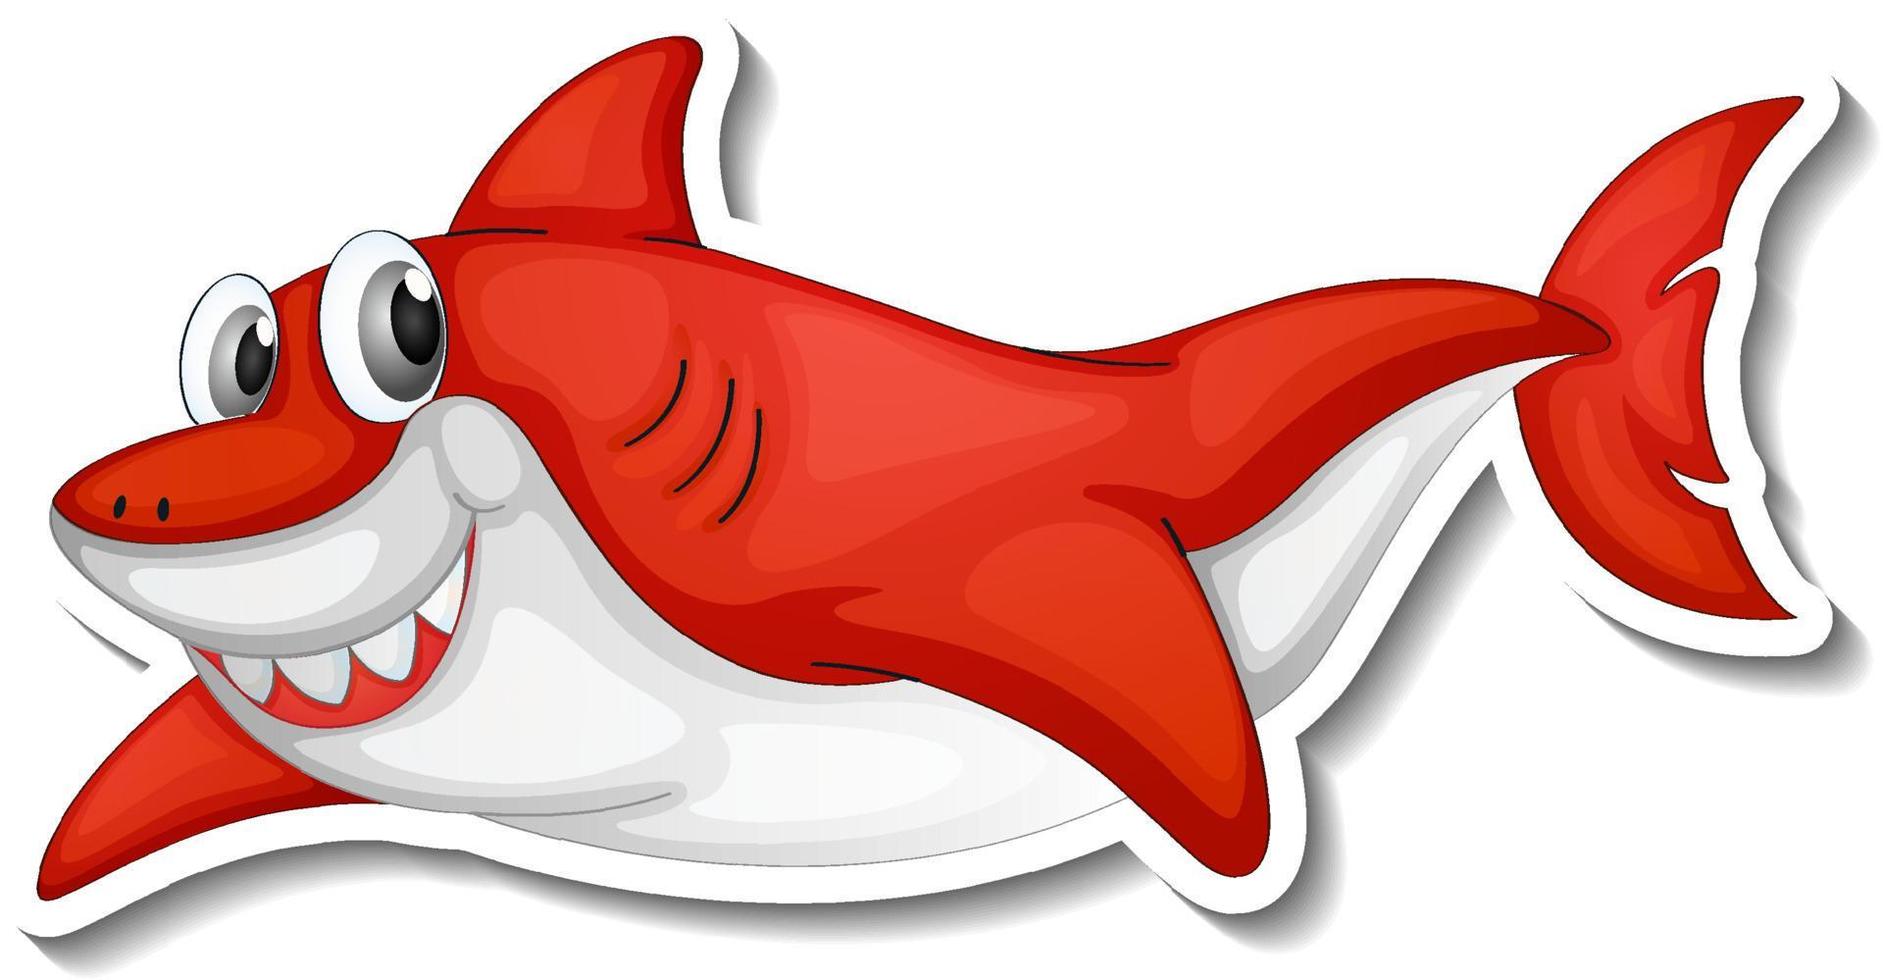 lächelnder Hai-Cartoon-Aufkleber vektor